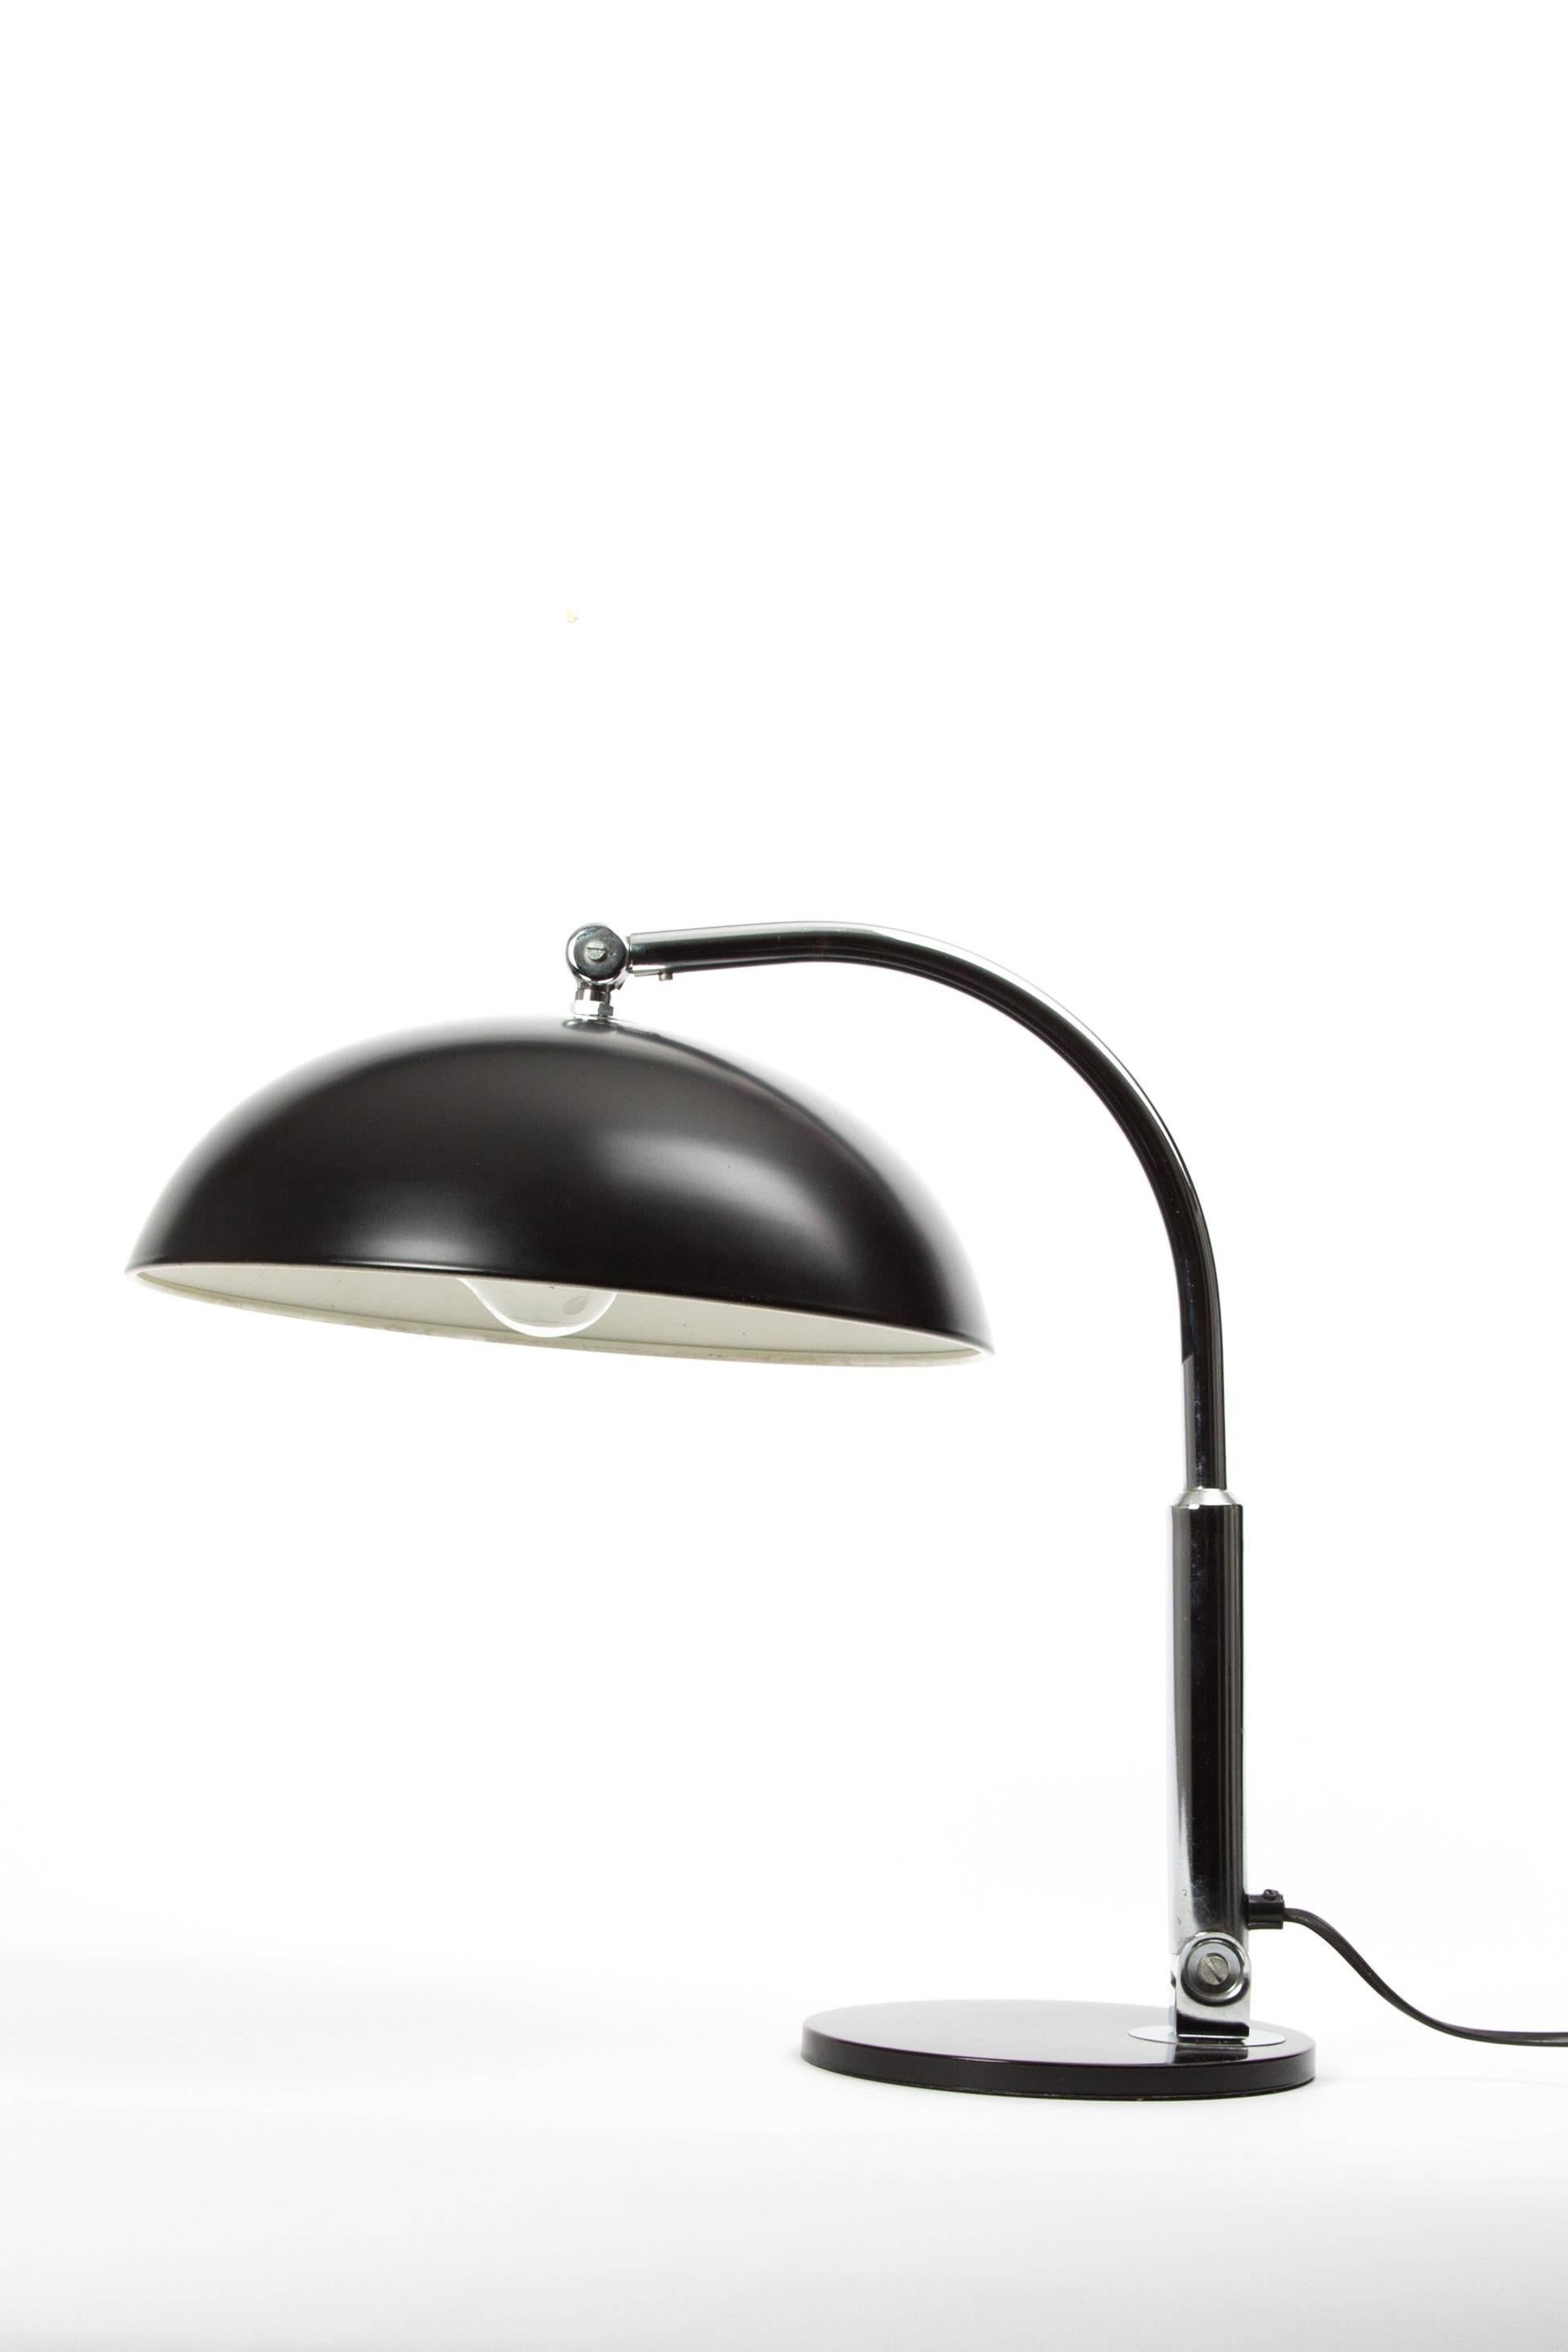 Mid-Century Modern Hala Zeist Table Lamp by J Busquet Black Desk Lamp